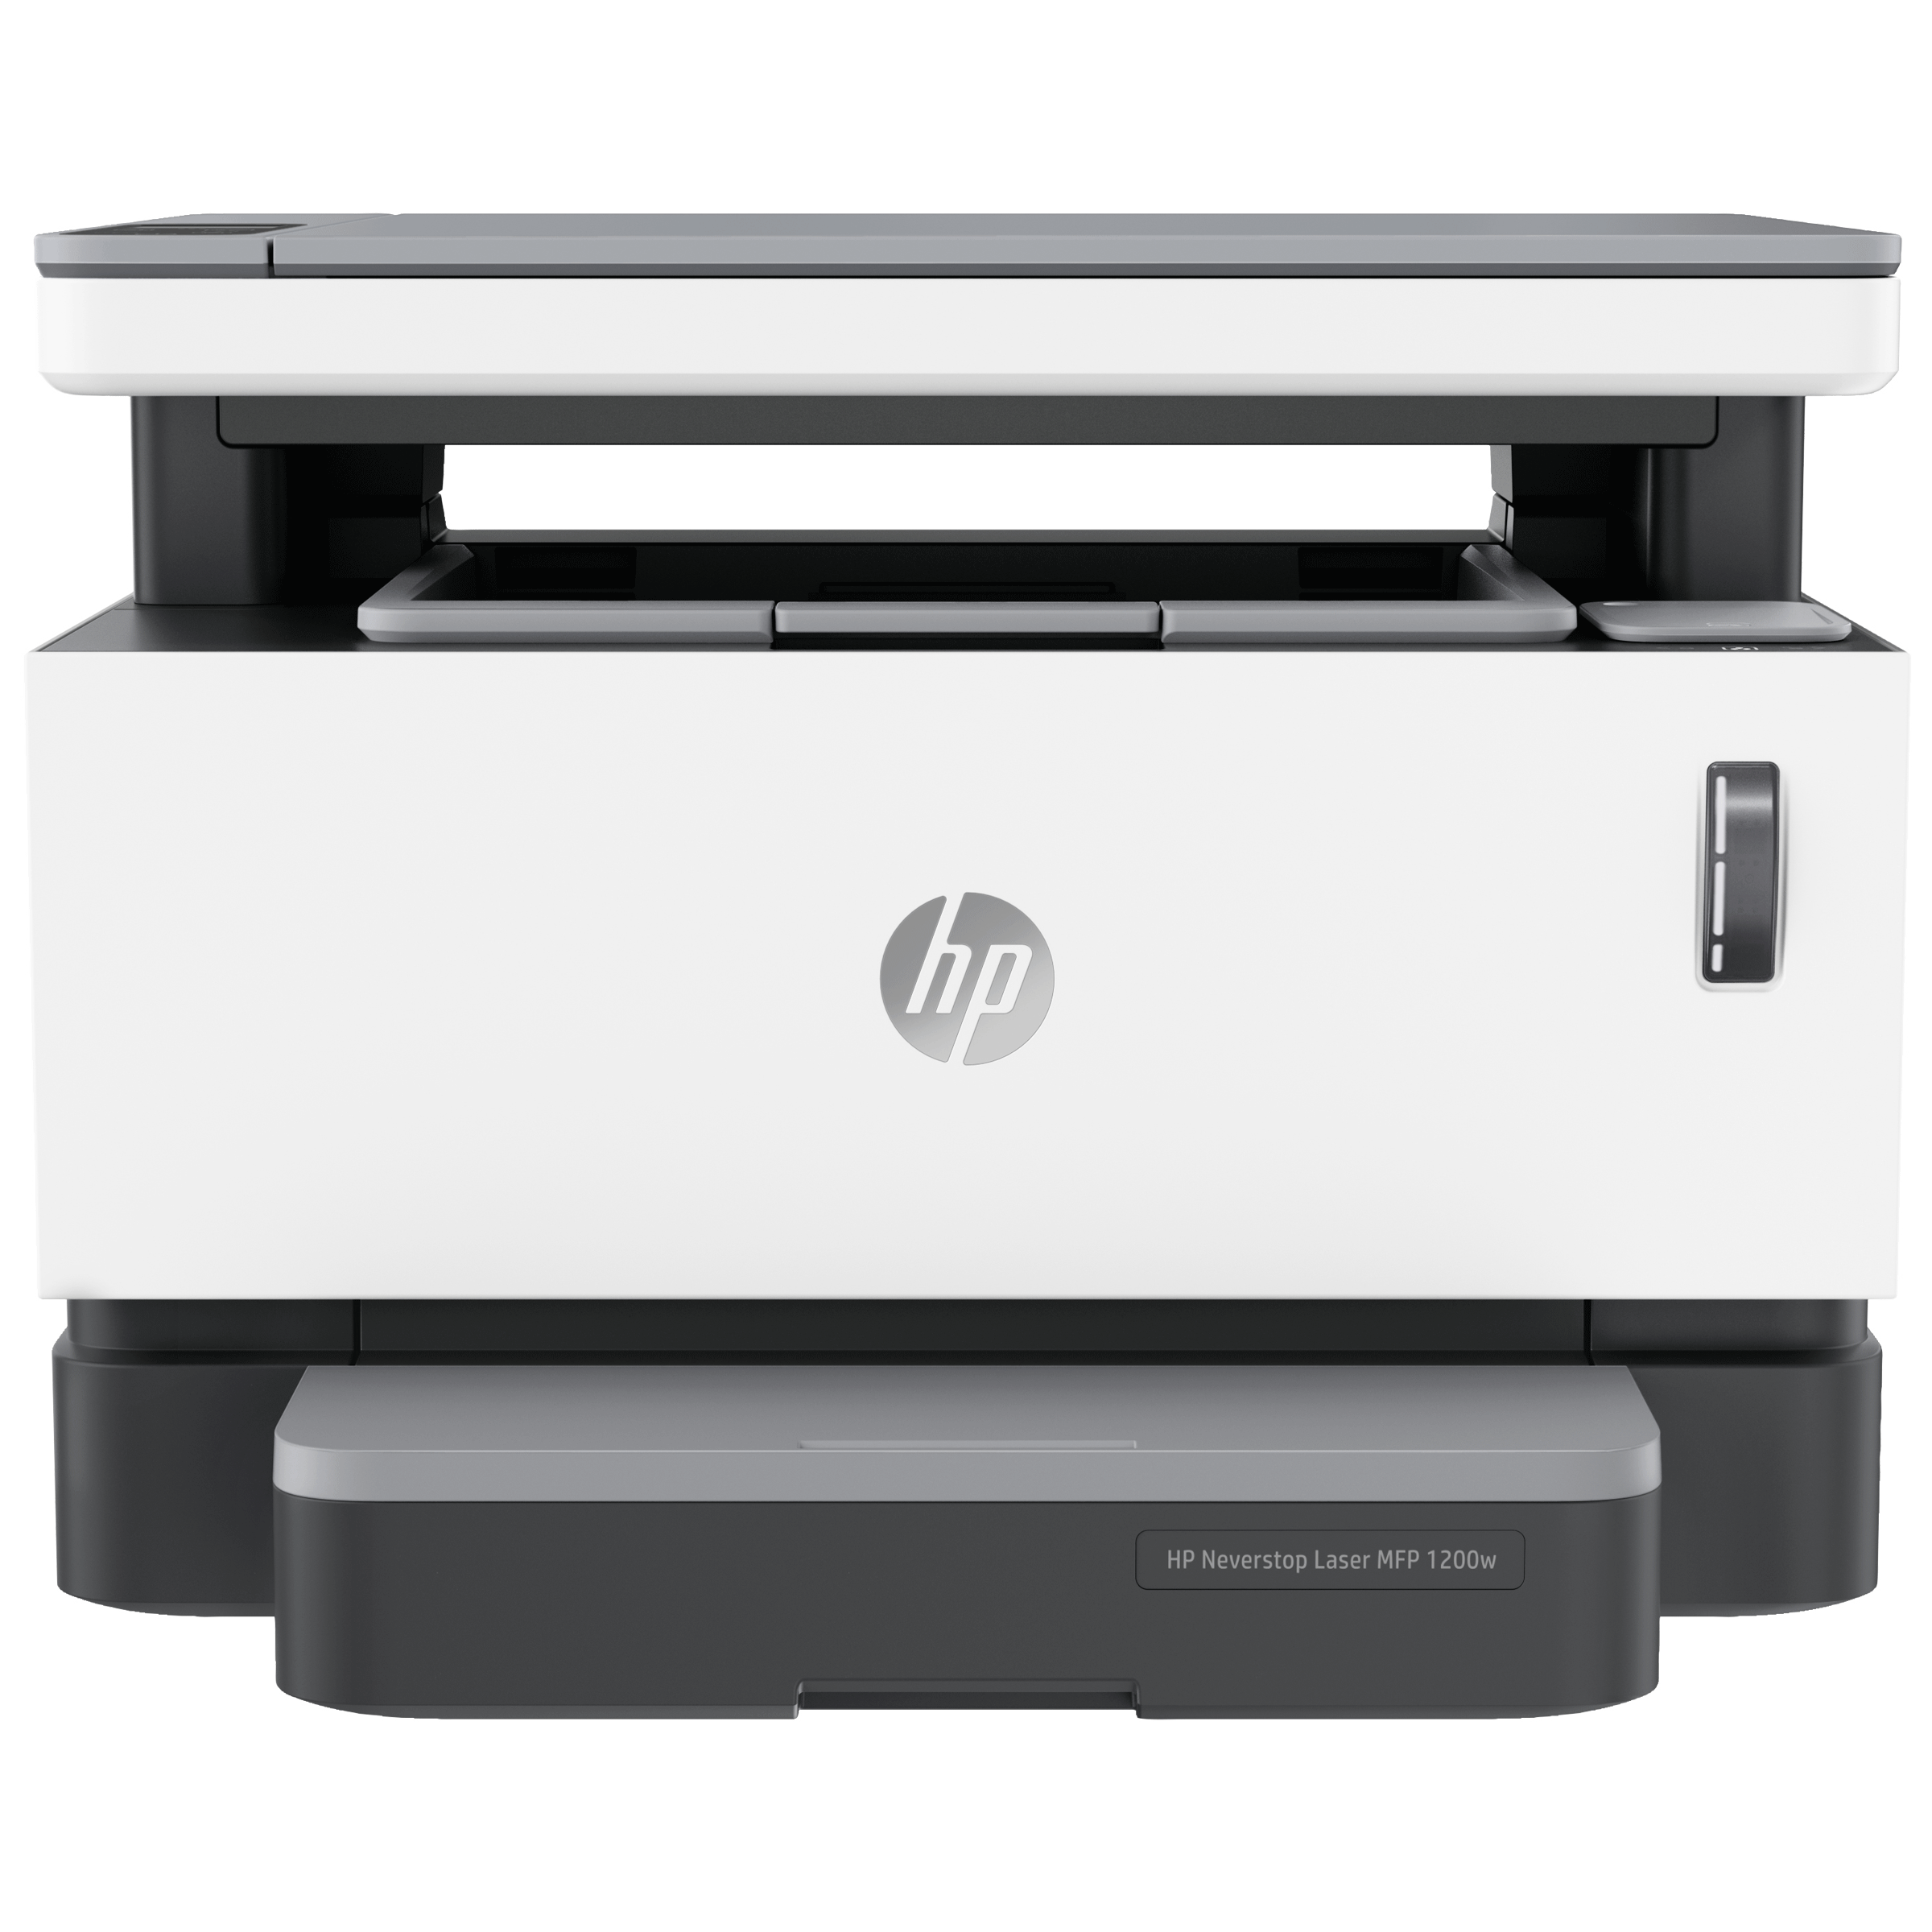 hp - hp Neverstop Laser 1200w Wireless Black & White Multi-Function Laserjet Printer (Mobile Printing Capability, 4RY26A, White)